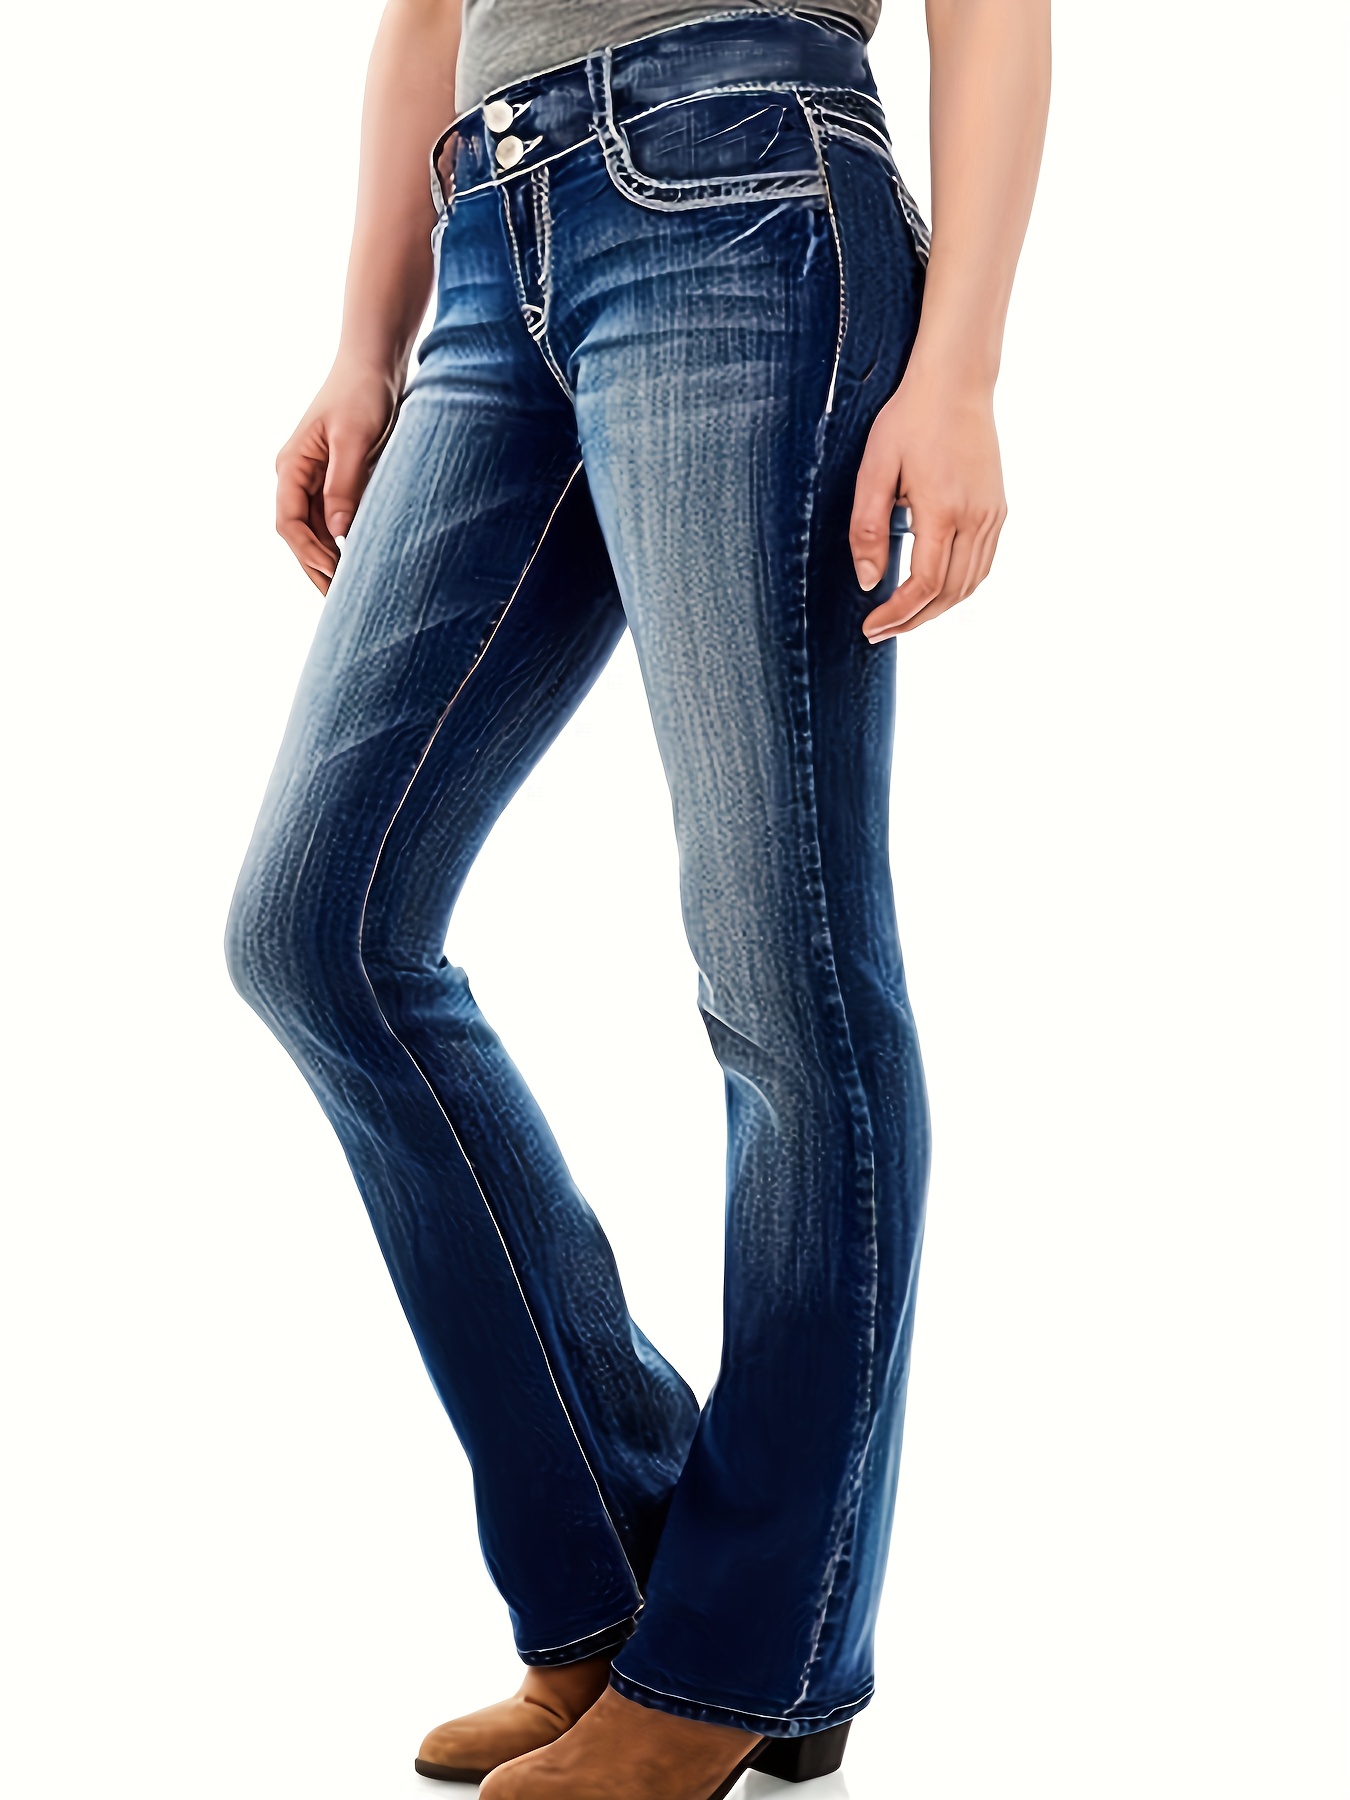 embroidered pocket niche bootcut jeans slant pockets stretchy washed denim pants womens denim jeans clothing